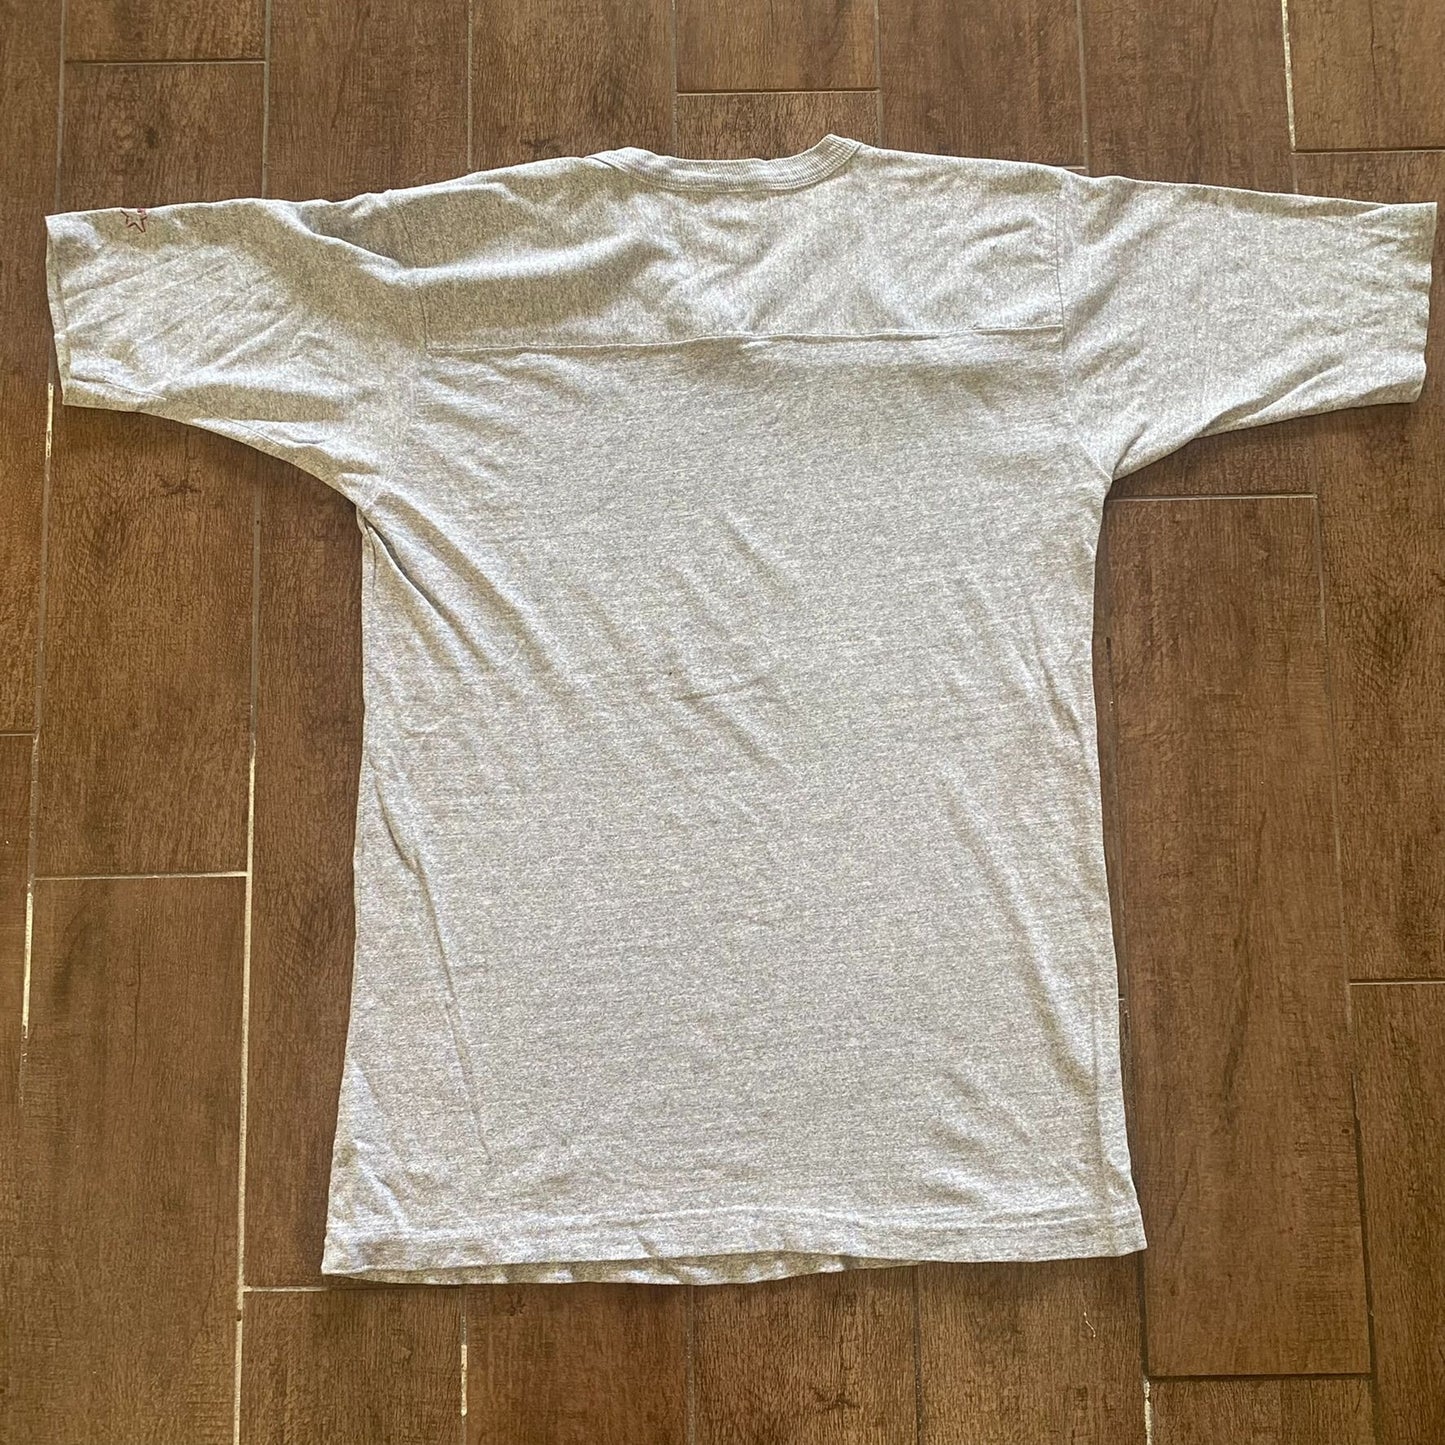 Harvard University Vintage Starter T-Shirt